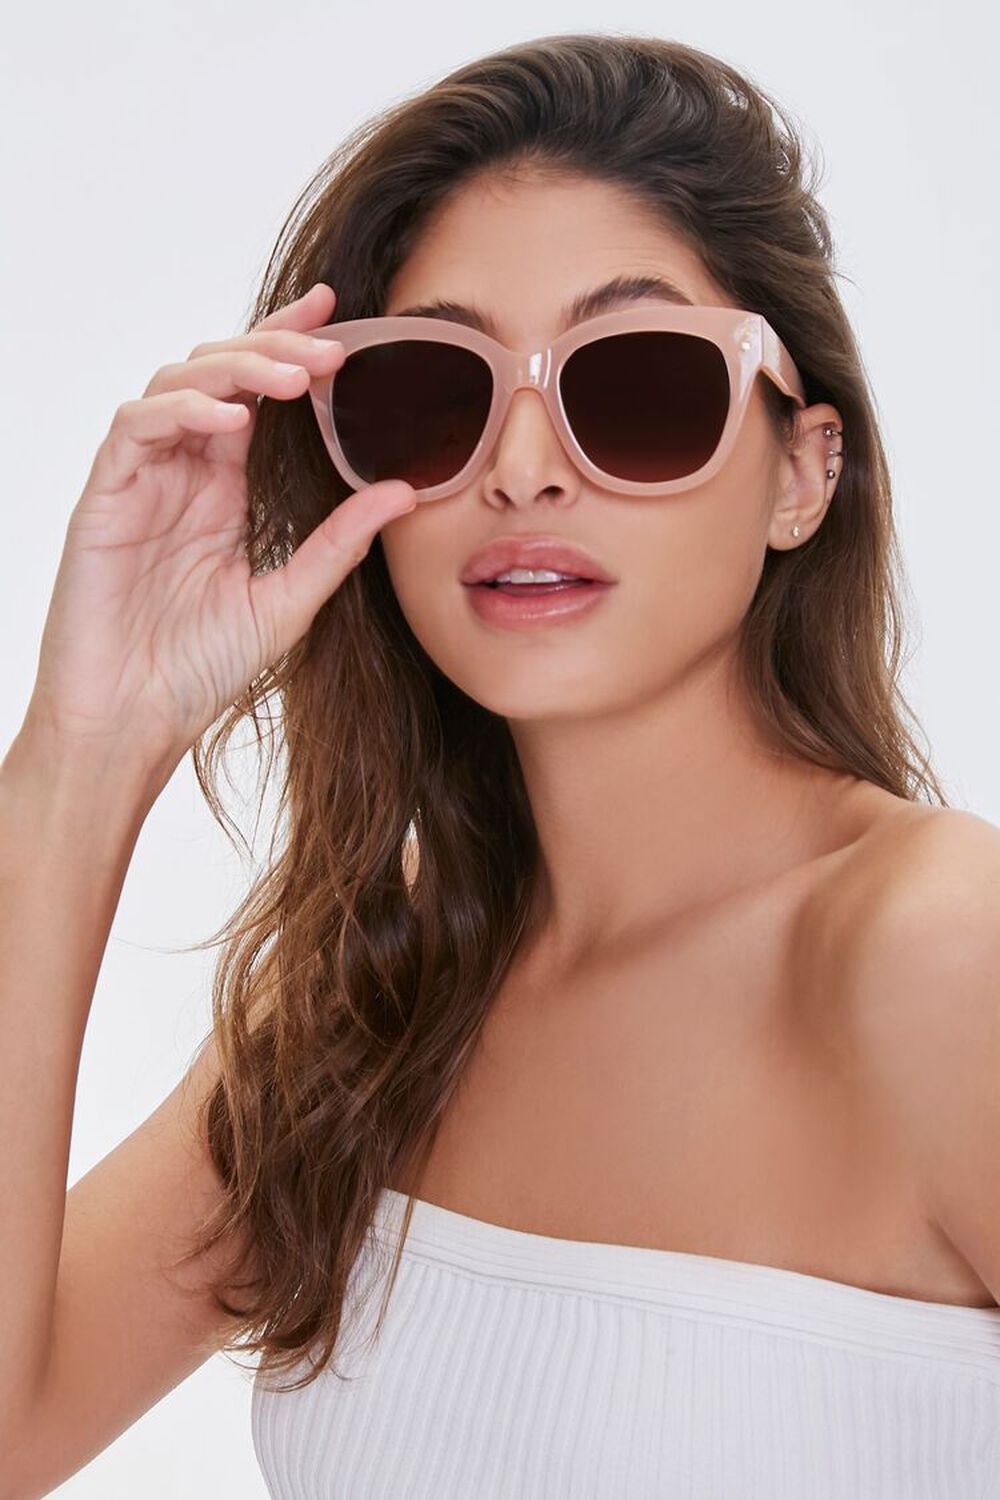 BLUSH/BLACK Round Tinted Sunglasses, image 1